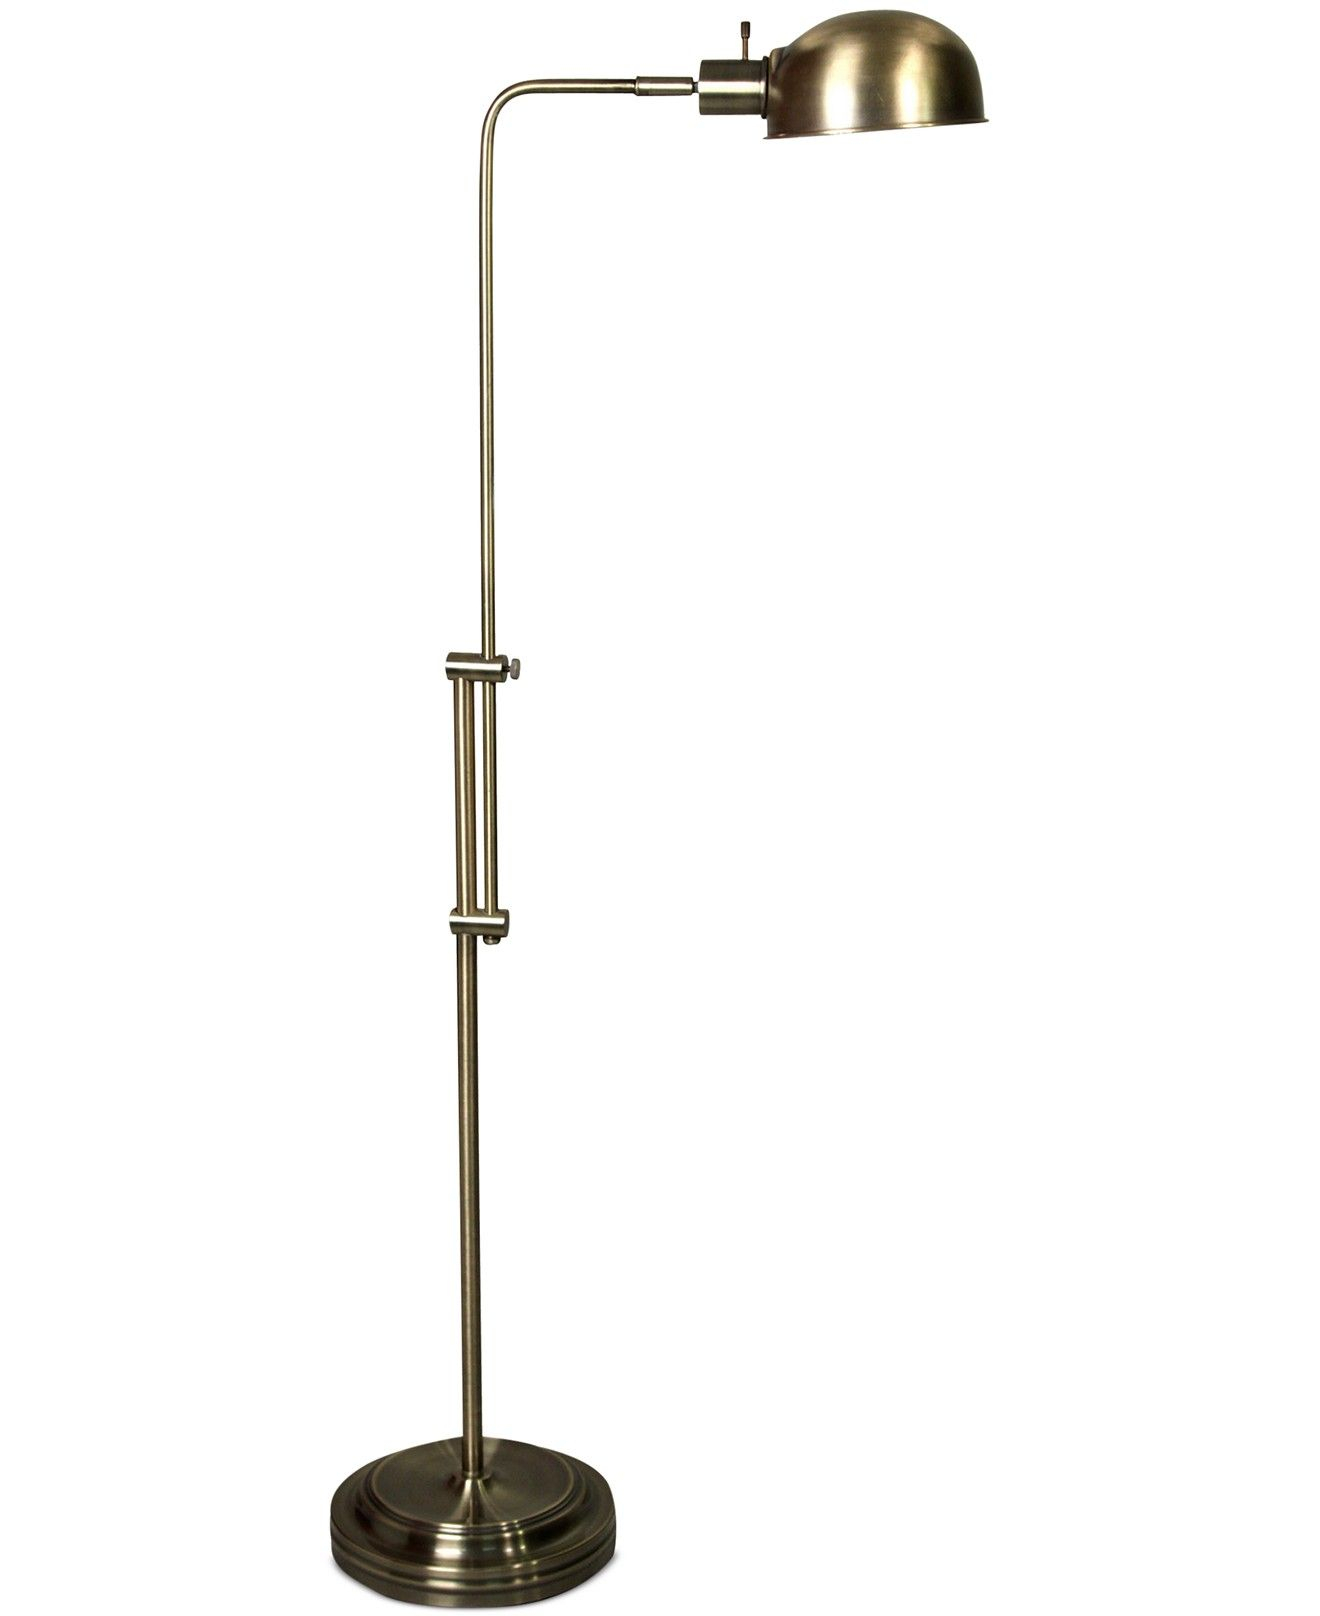 Stylecraft Adjustable Pharmacy Floor Lamp Lighting Lamps pertaining to sizing 1320 X 1616